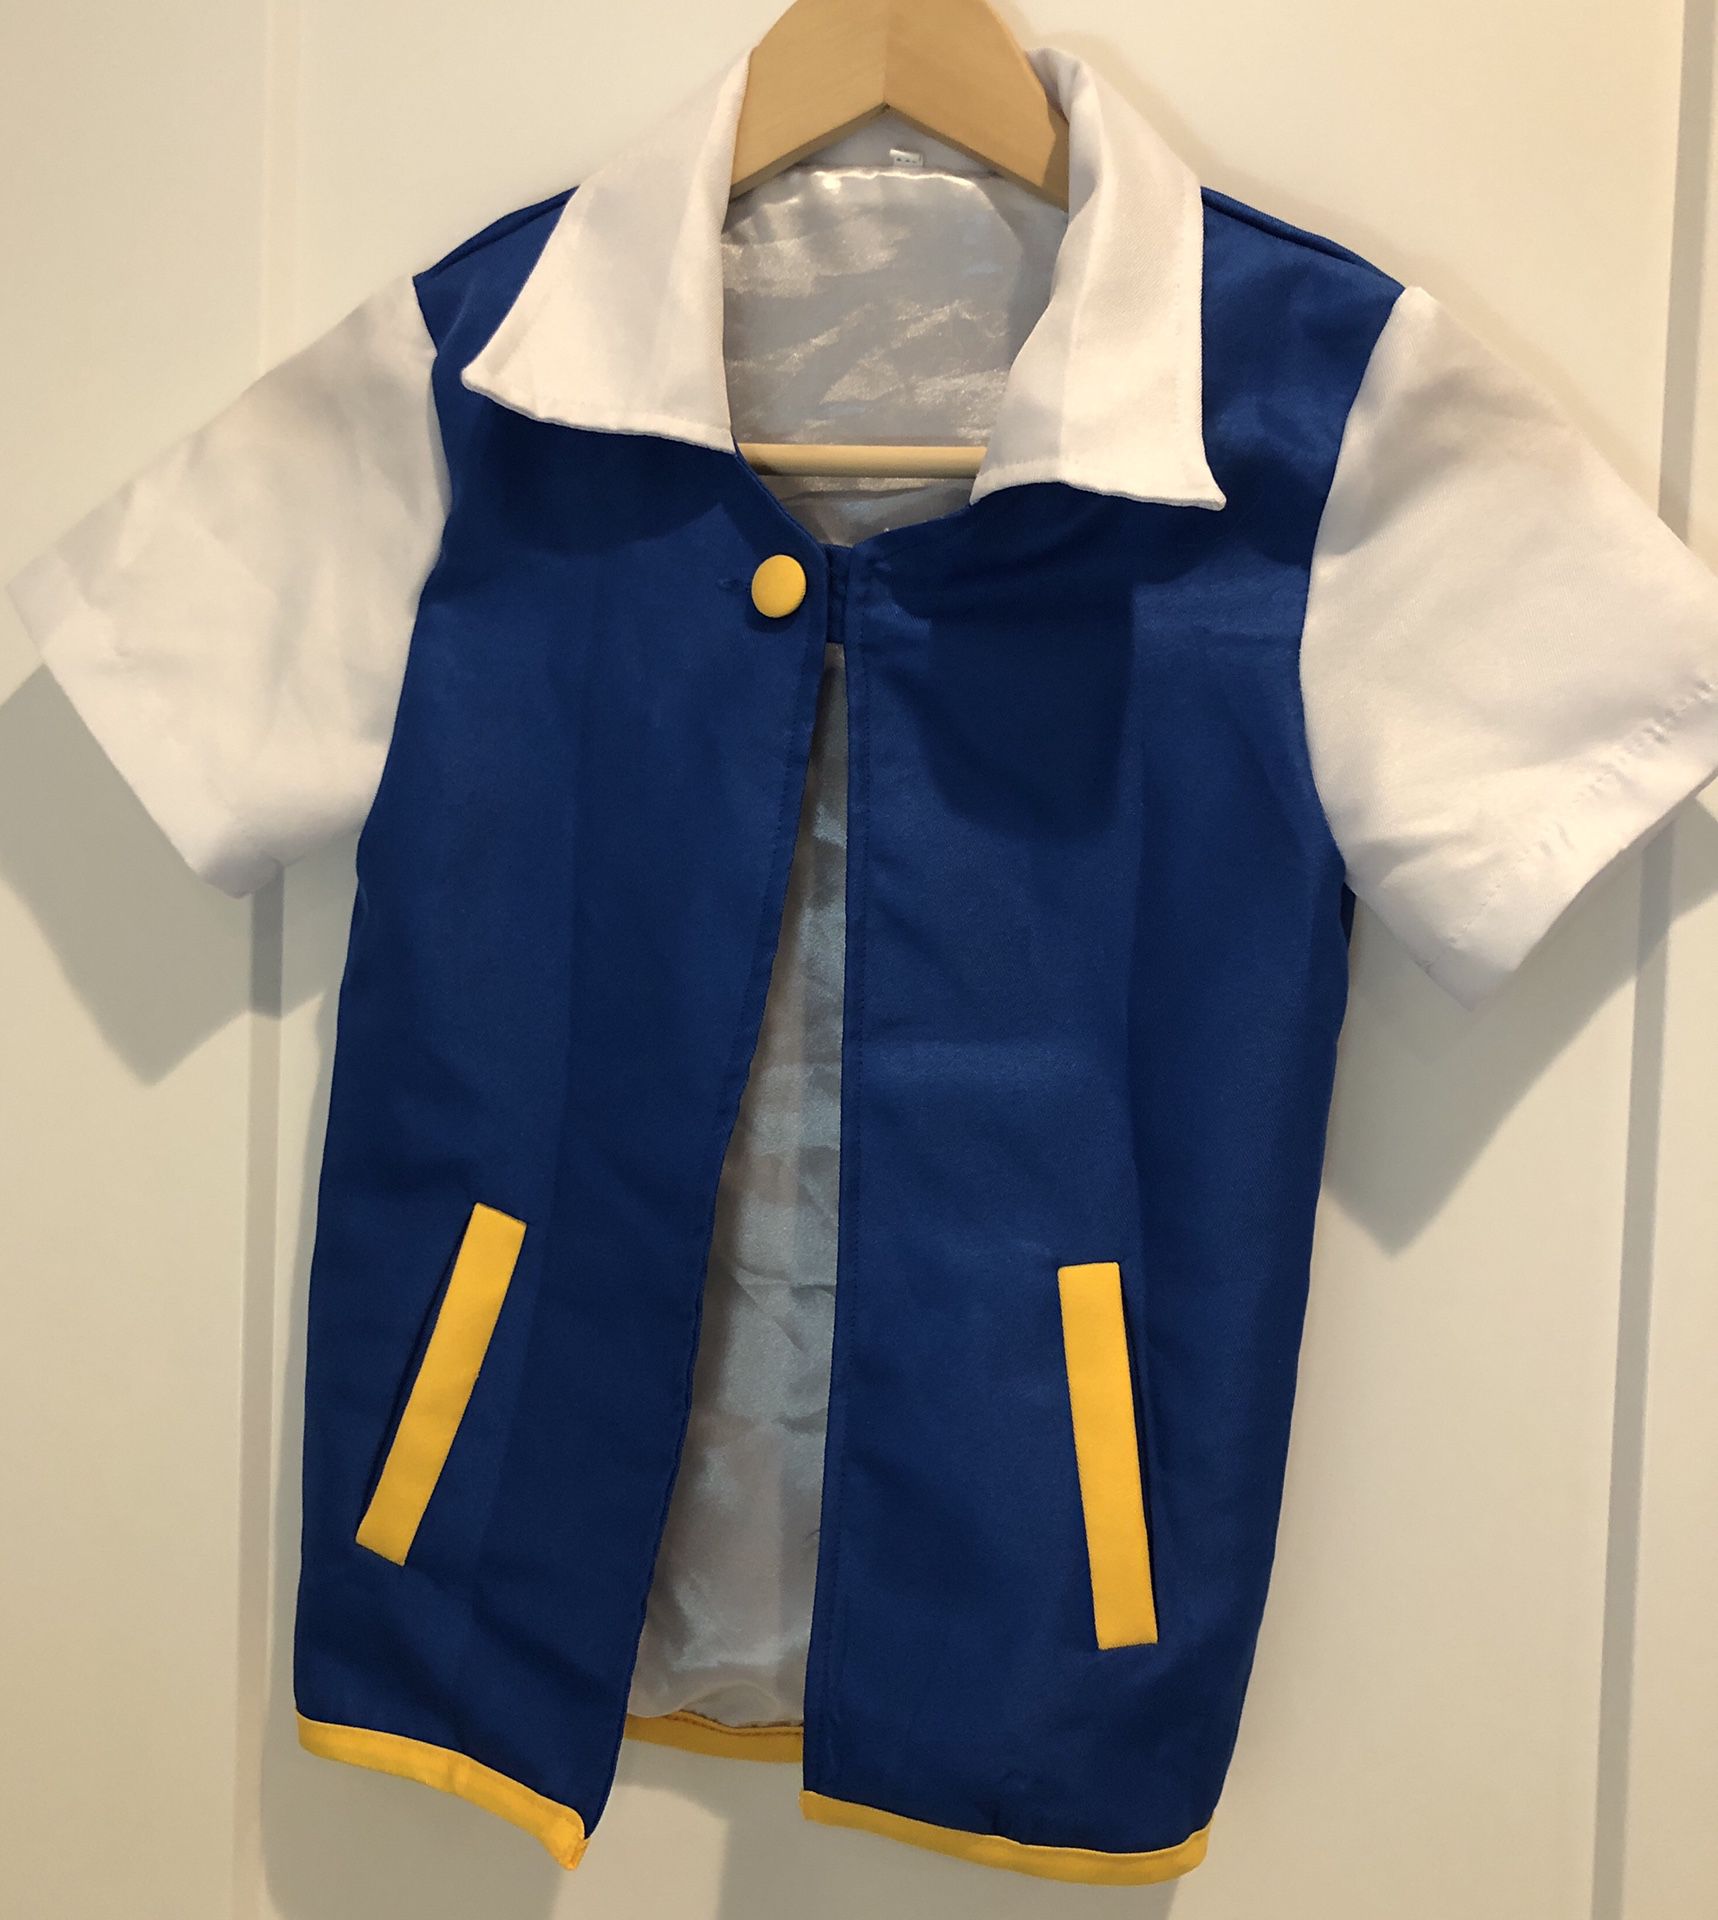 Anime Pokémon Ash Ketchum Short Sleeve Jacket Outfit Cosplay Kids Costume Vest Only